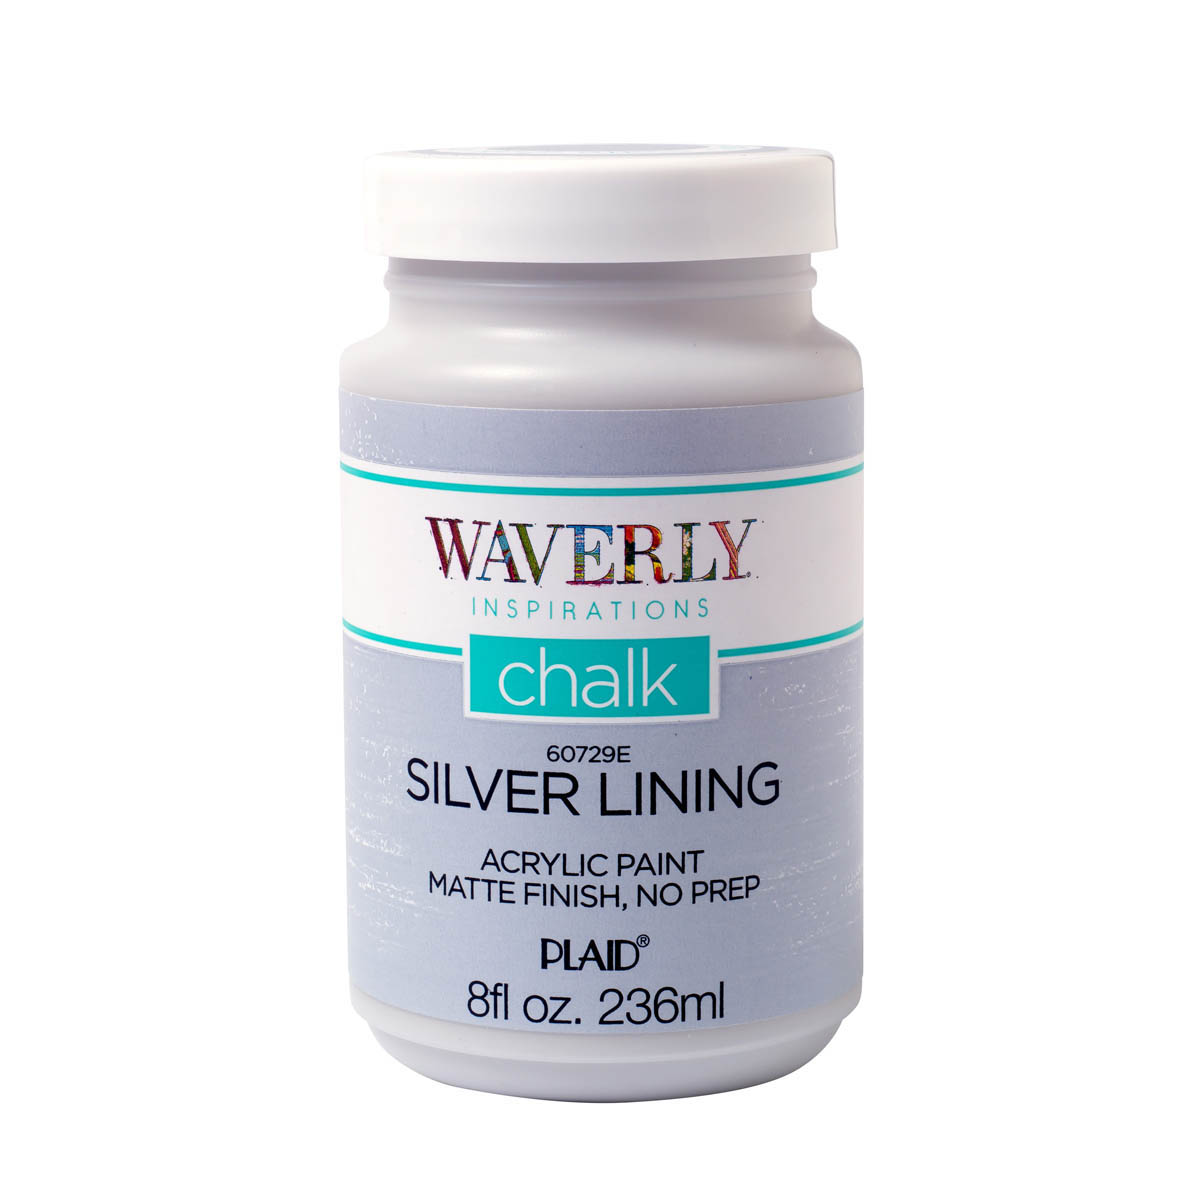 Waverly ® Inspirations Chalk Acrylic Paint - Silver Lining, 8 oz. - 60729E